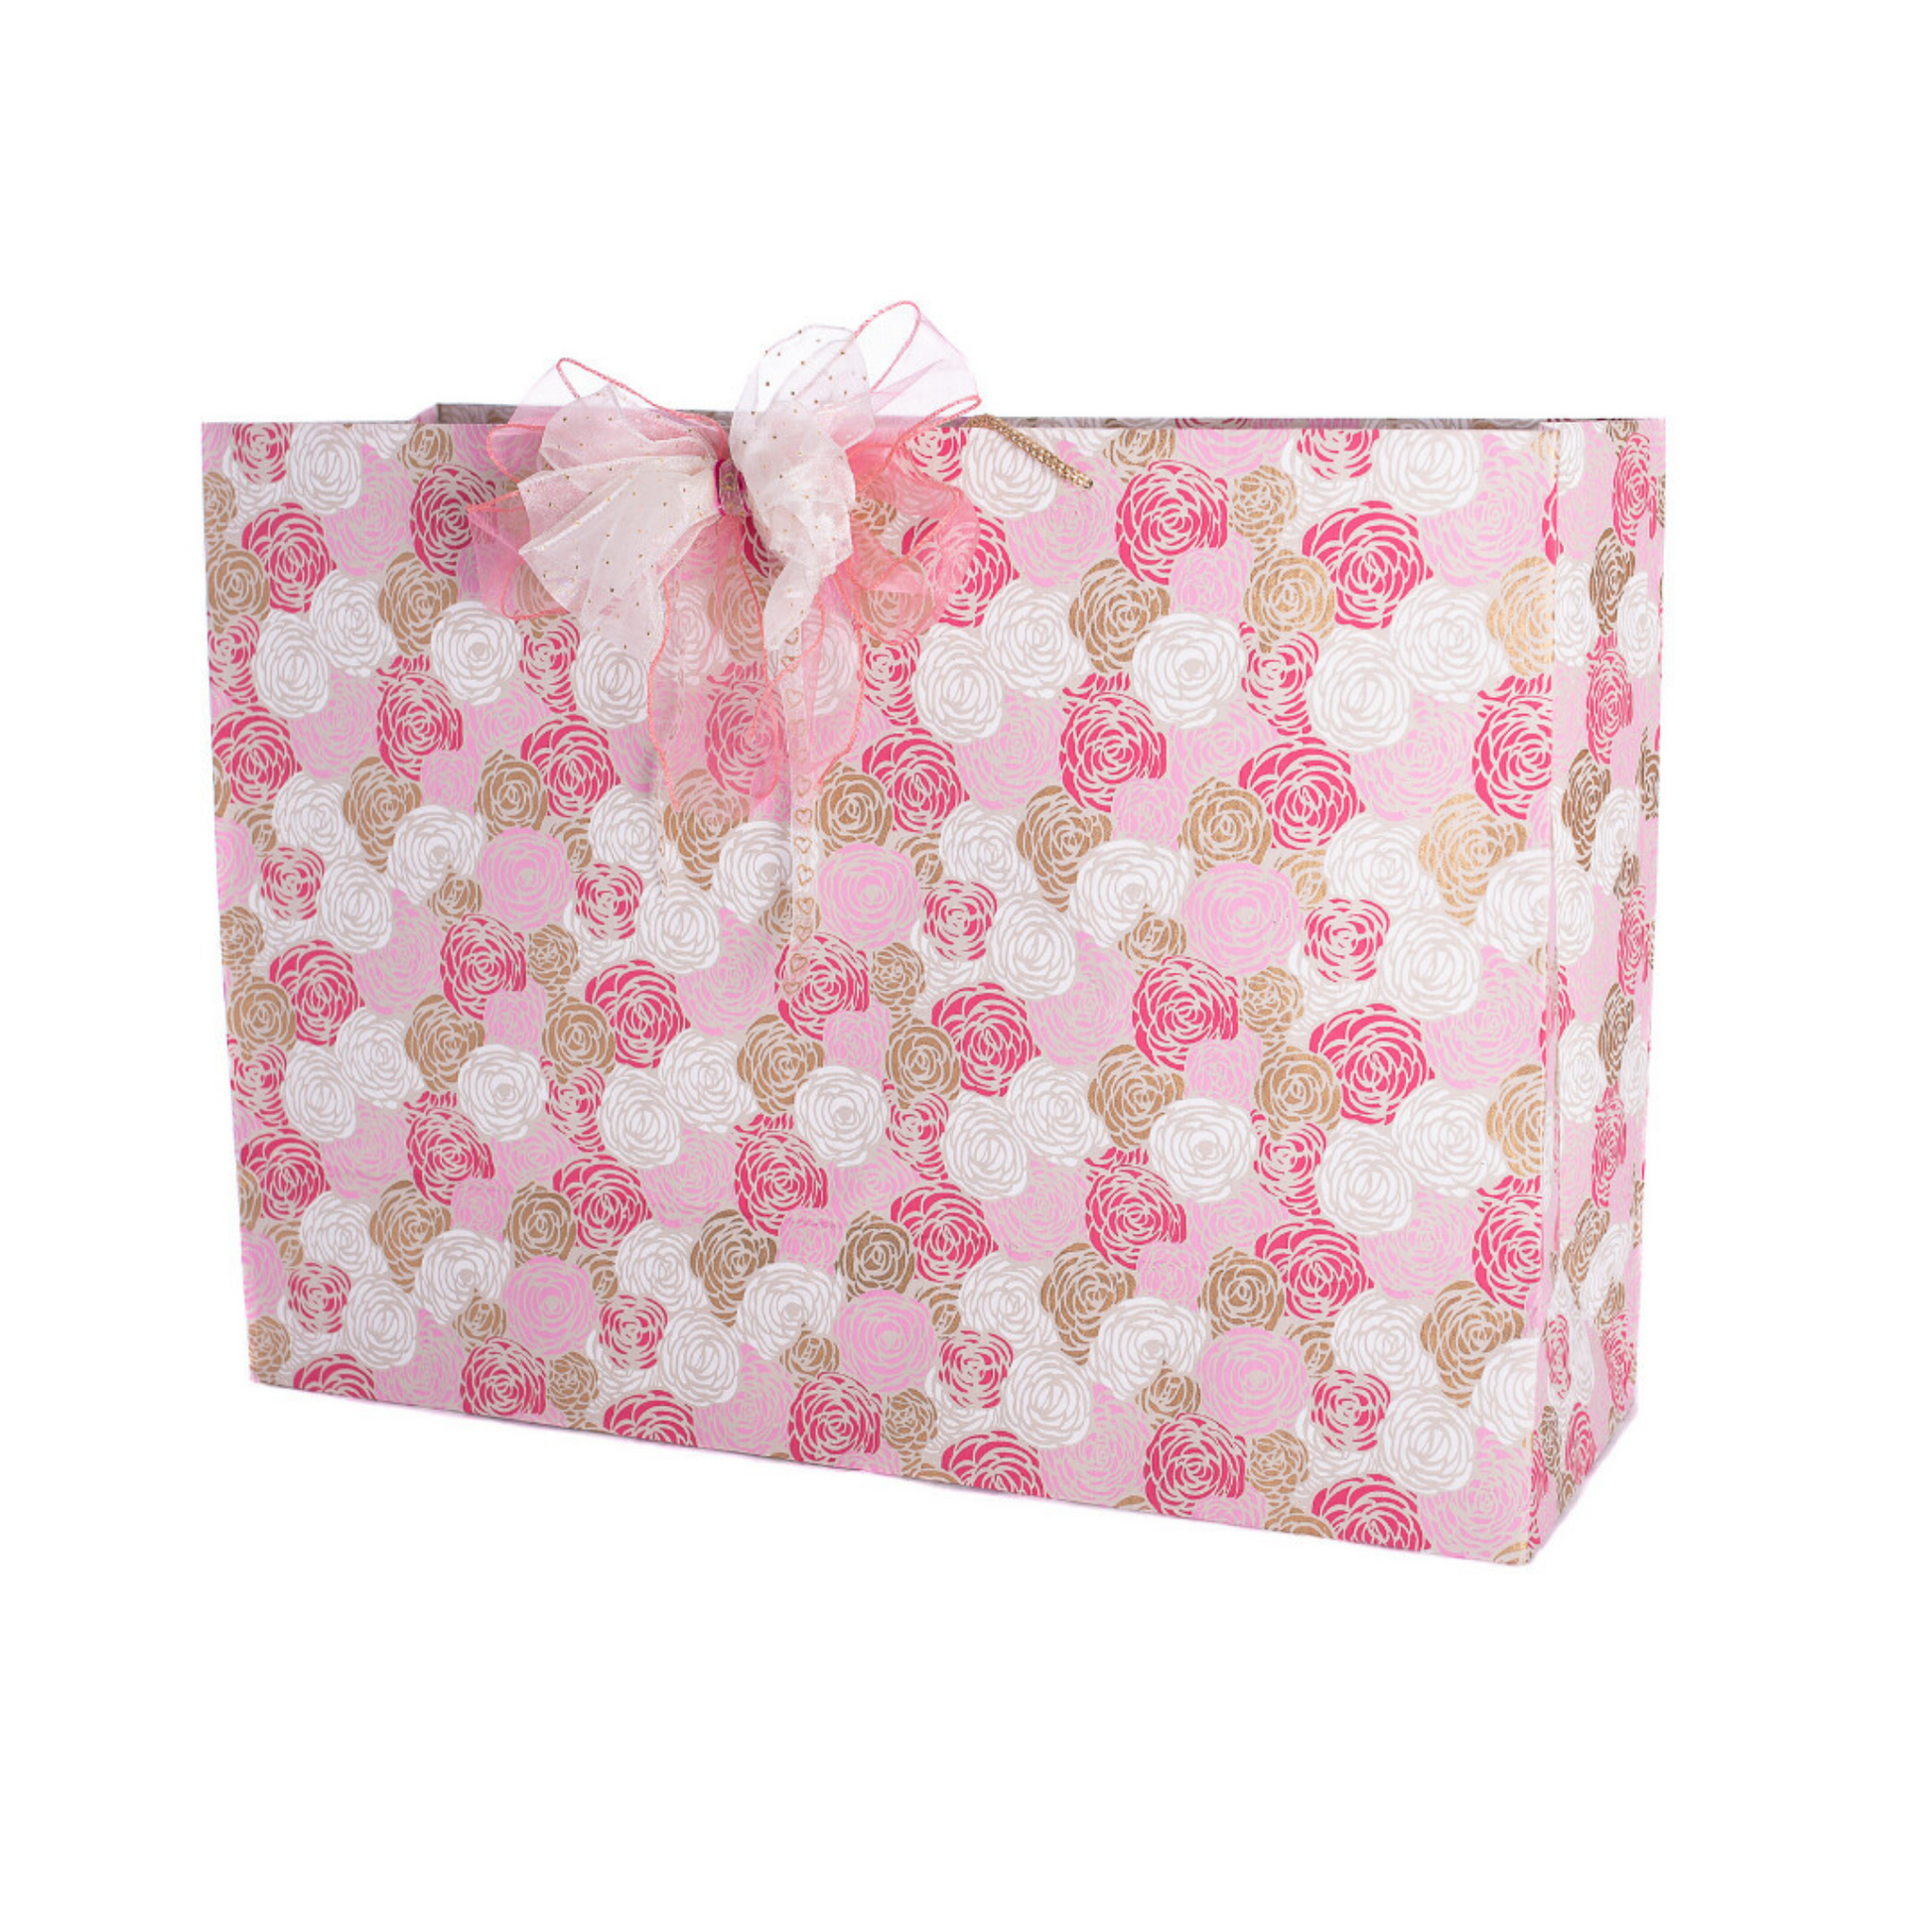 GIft Bag in Floral Pink Jumbo Gift Bag